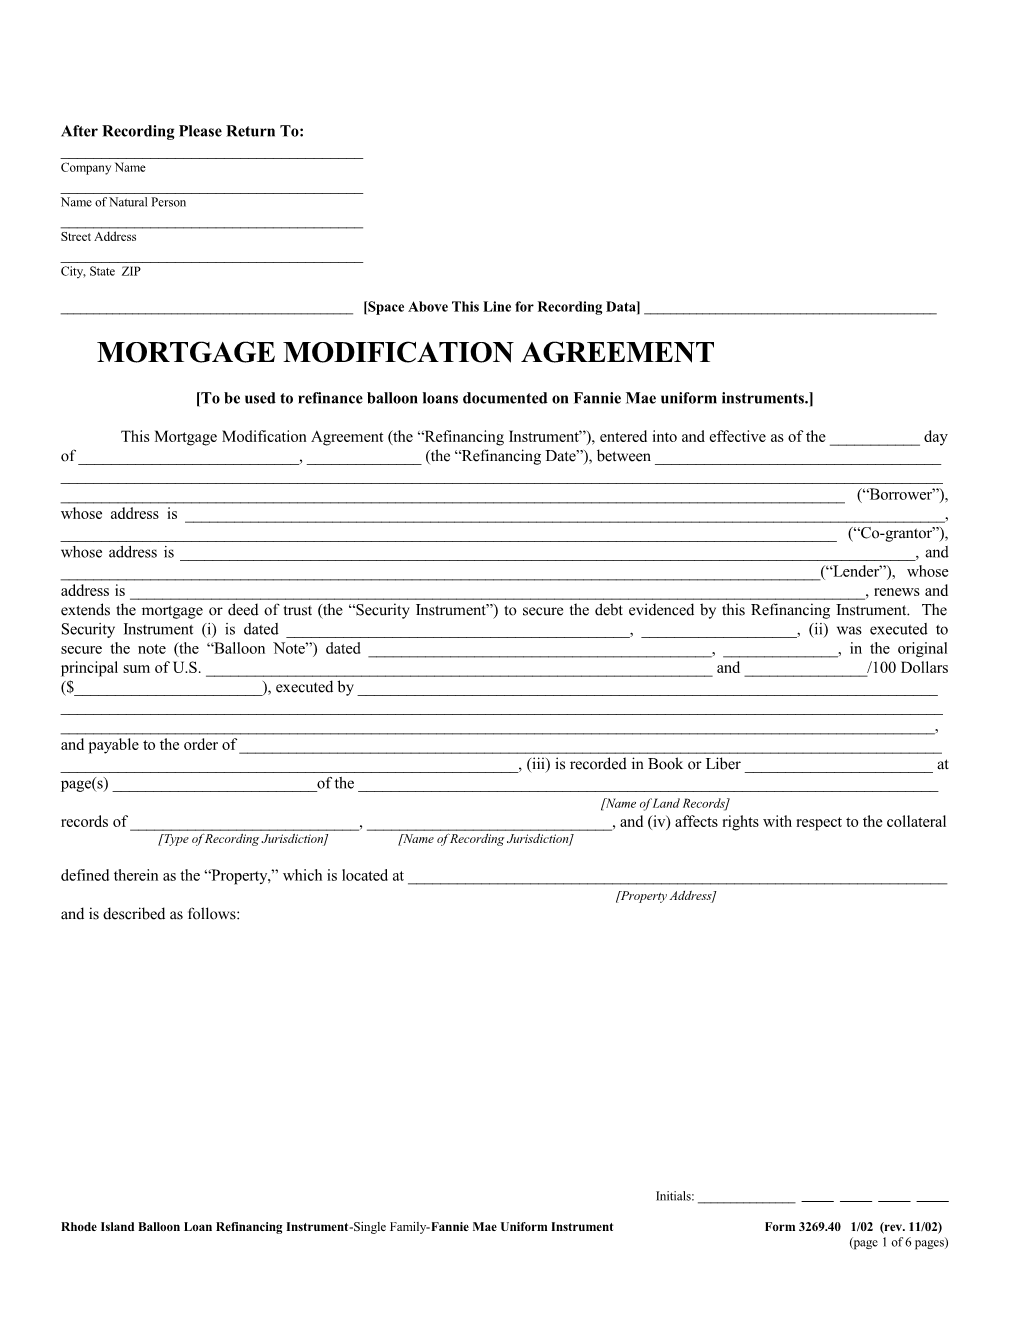 Rhode Island Balloon Loan Refinancing Instrument (Form: 3269.40): Word